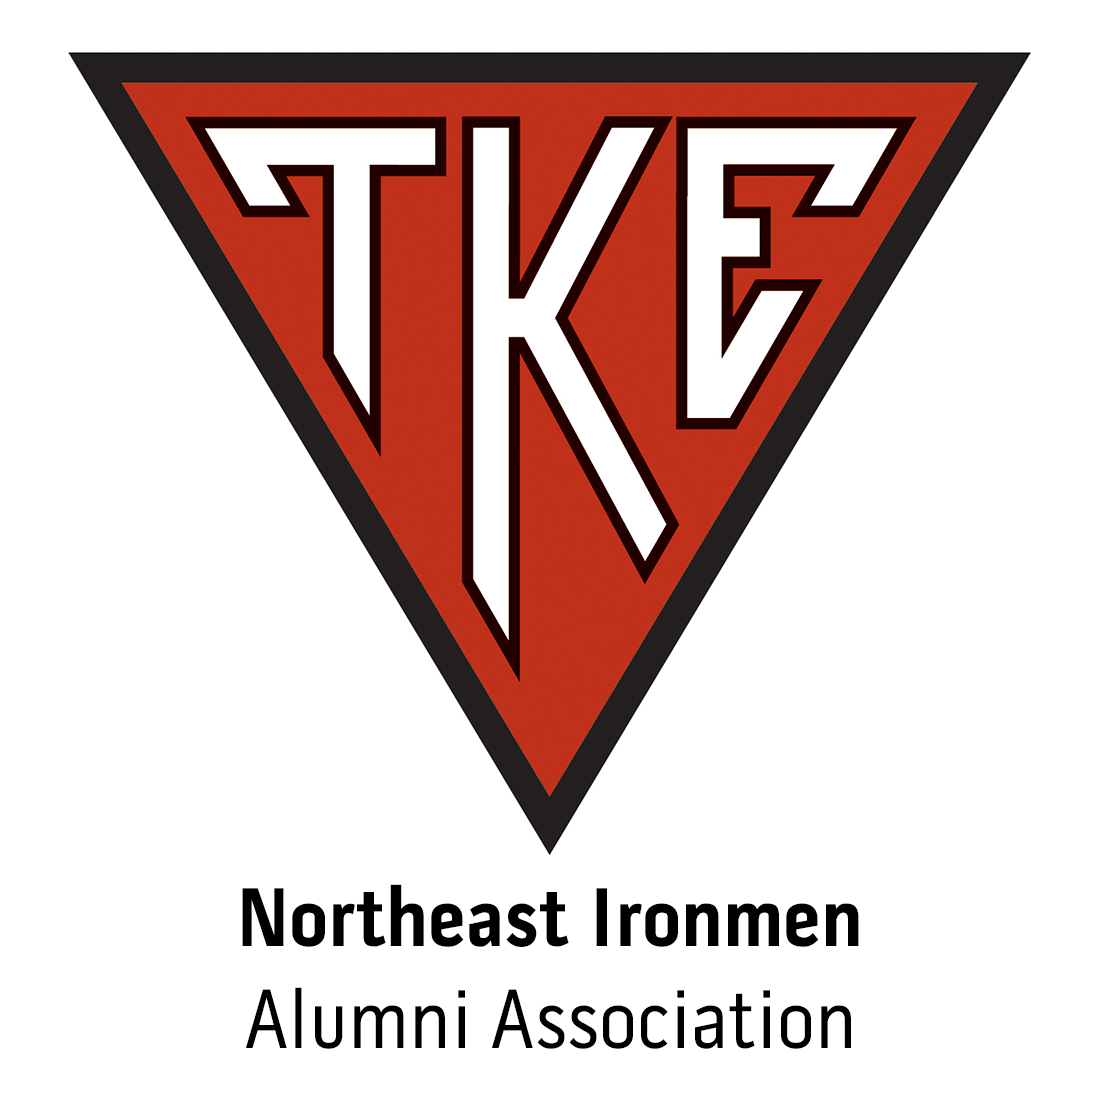 Northeast Ironmen Alumni Association at Region 1